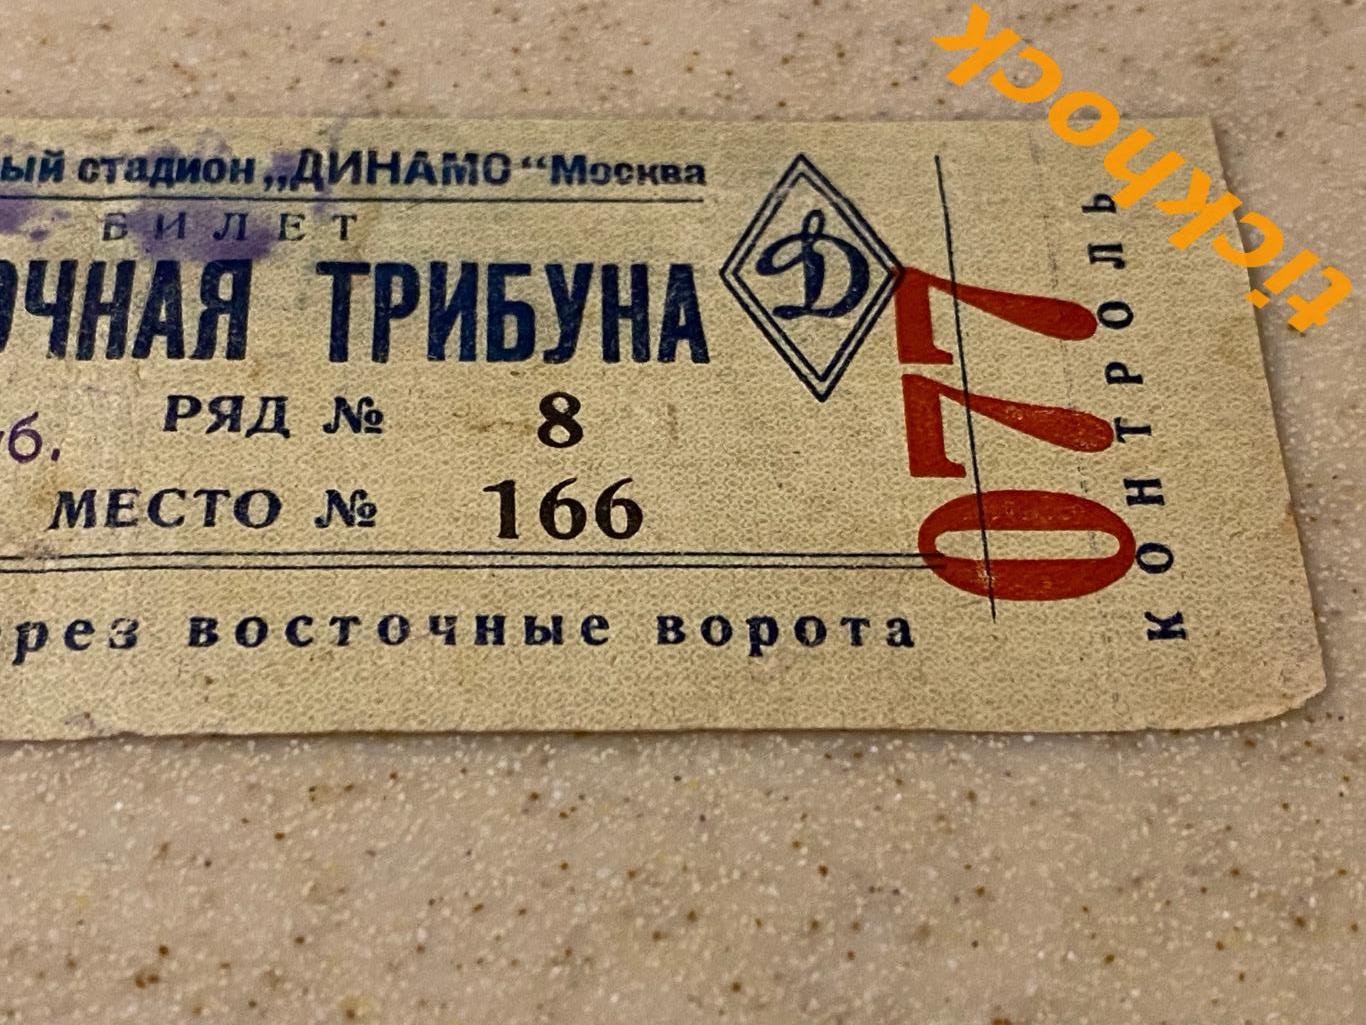 Спартак Москва - ЦДСА / ЦСКА Москва 08.05.1955-- билет -- восточная трибуна 3